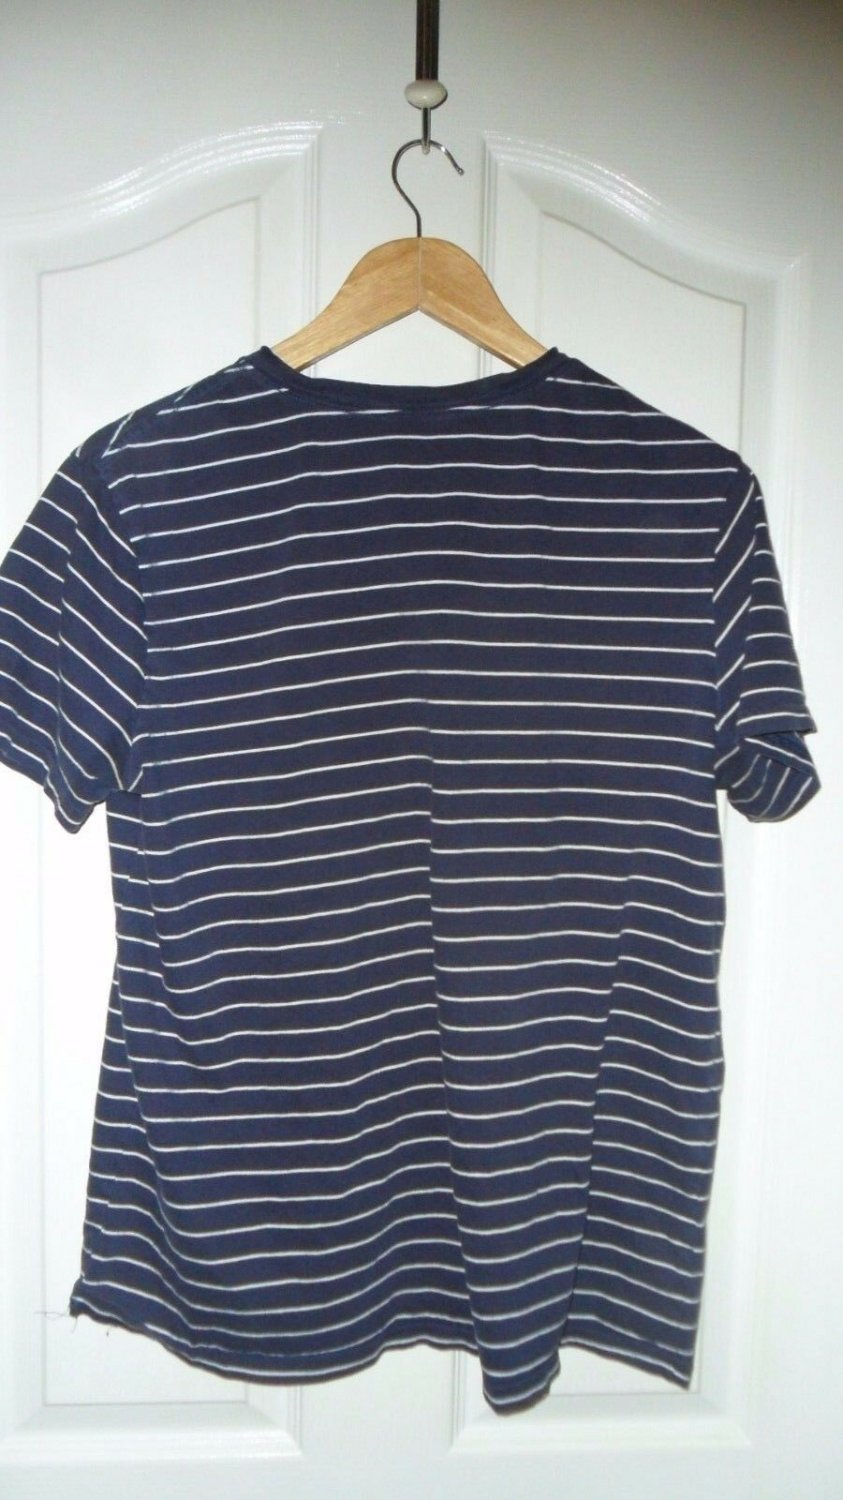 Mossimo Supply Company V-Neck Navy and White Striped Shirt Small